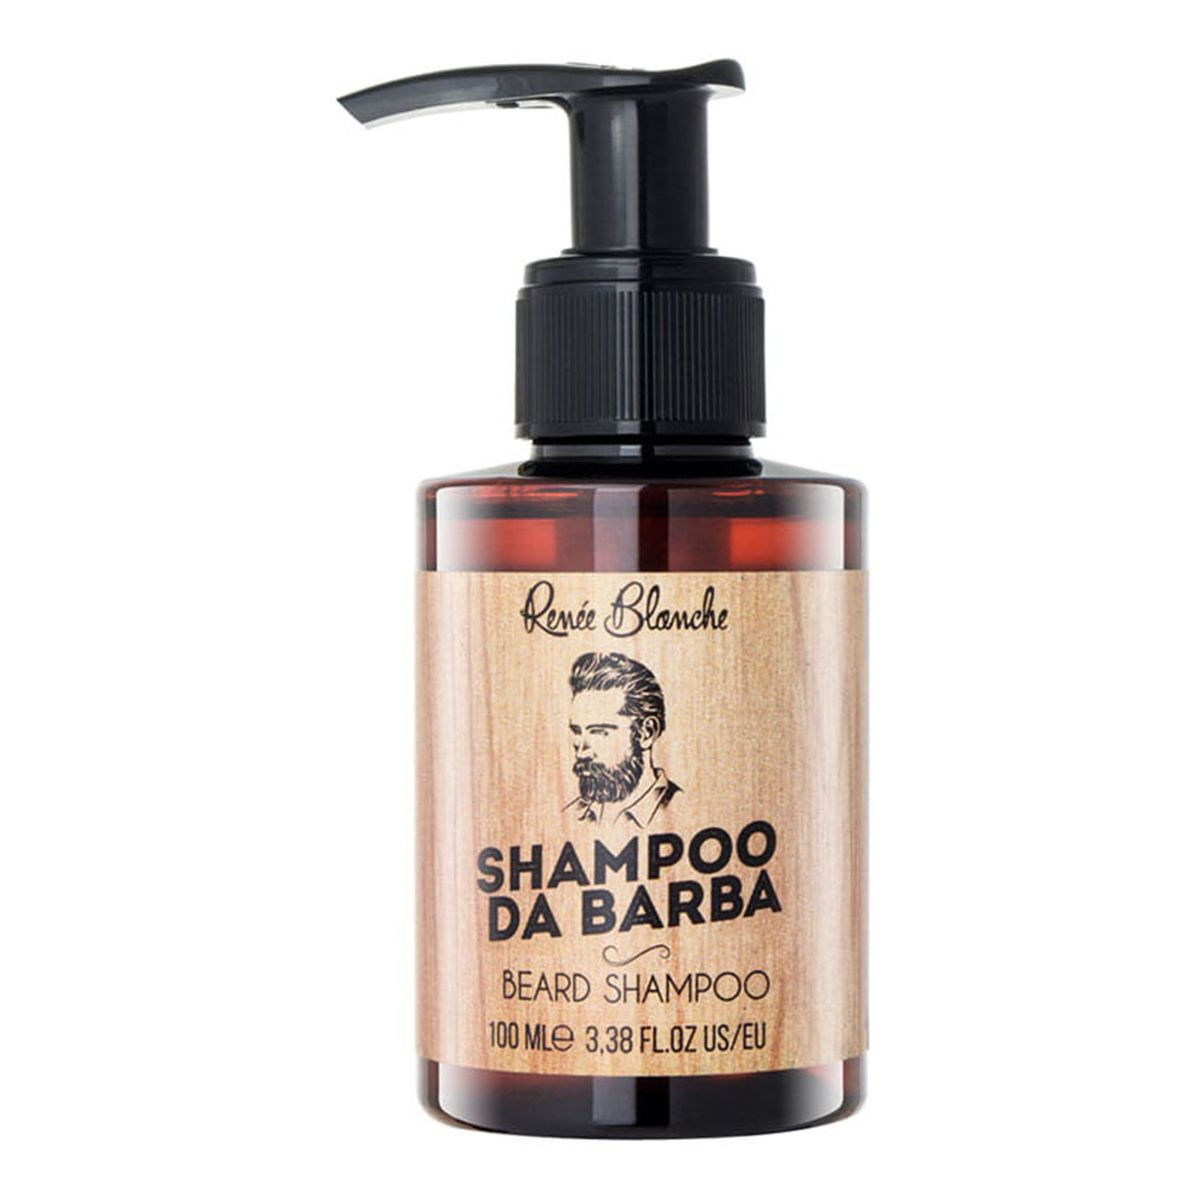 Renee Blanche Gold beard shampoo szampon do brody 100ml